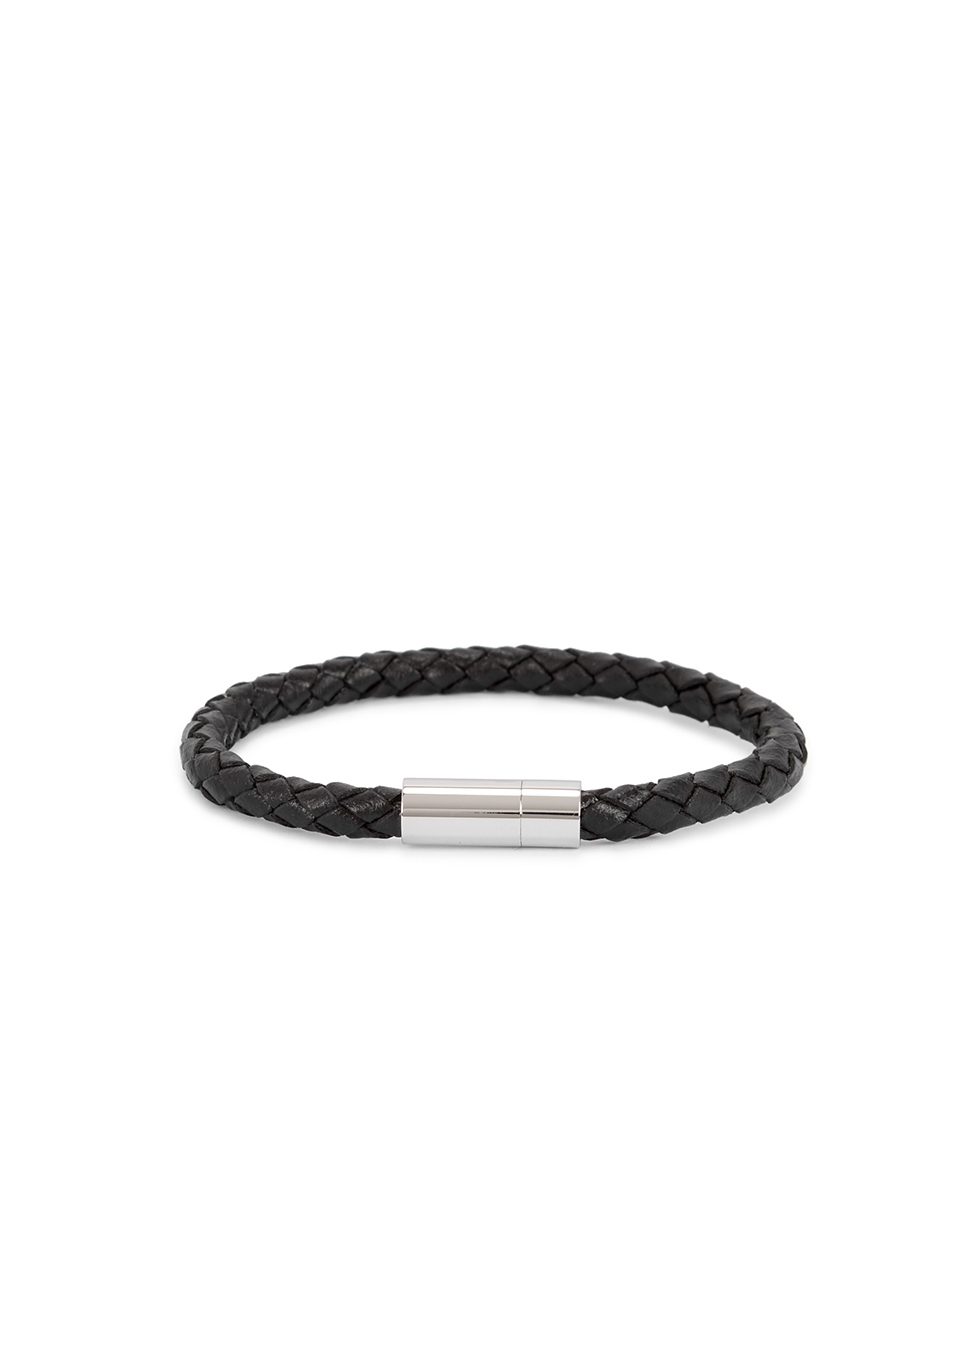 Paul Smith Black woven leather bracelet - Harvey Nichols